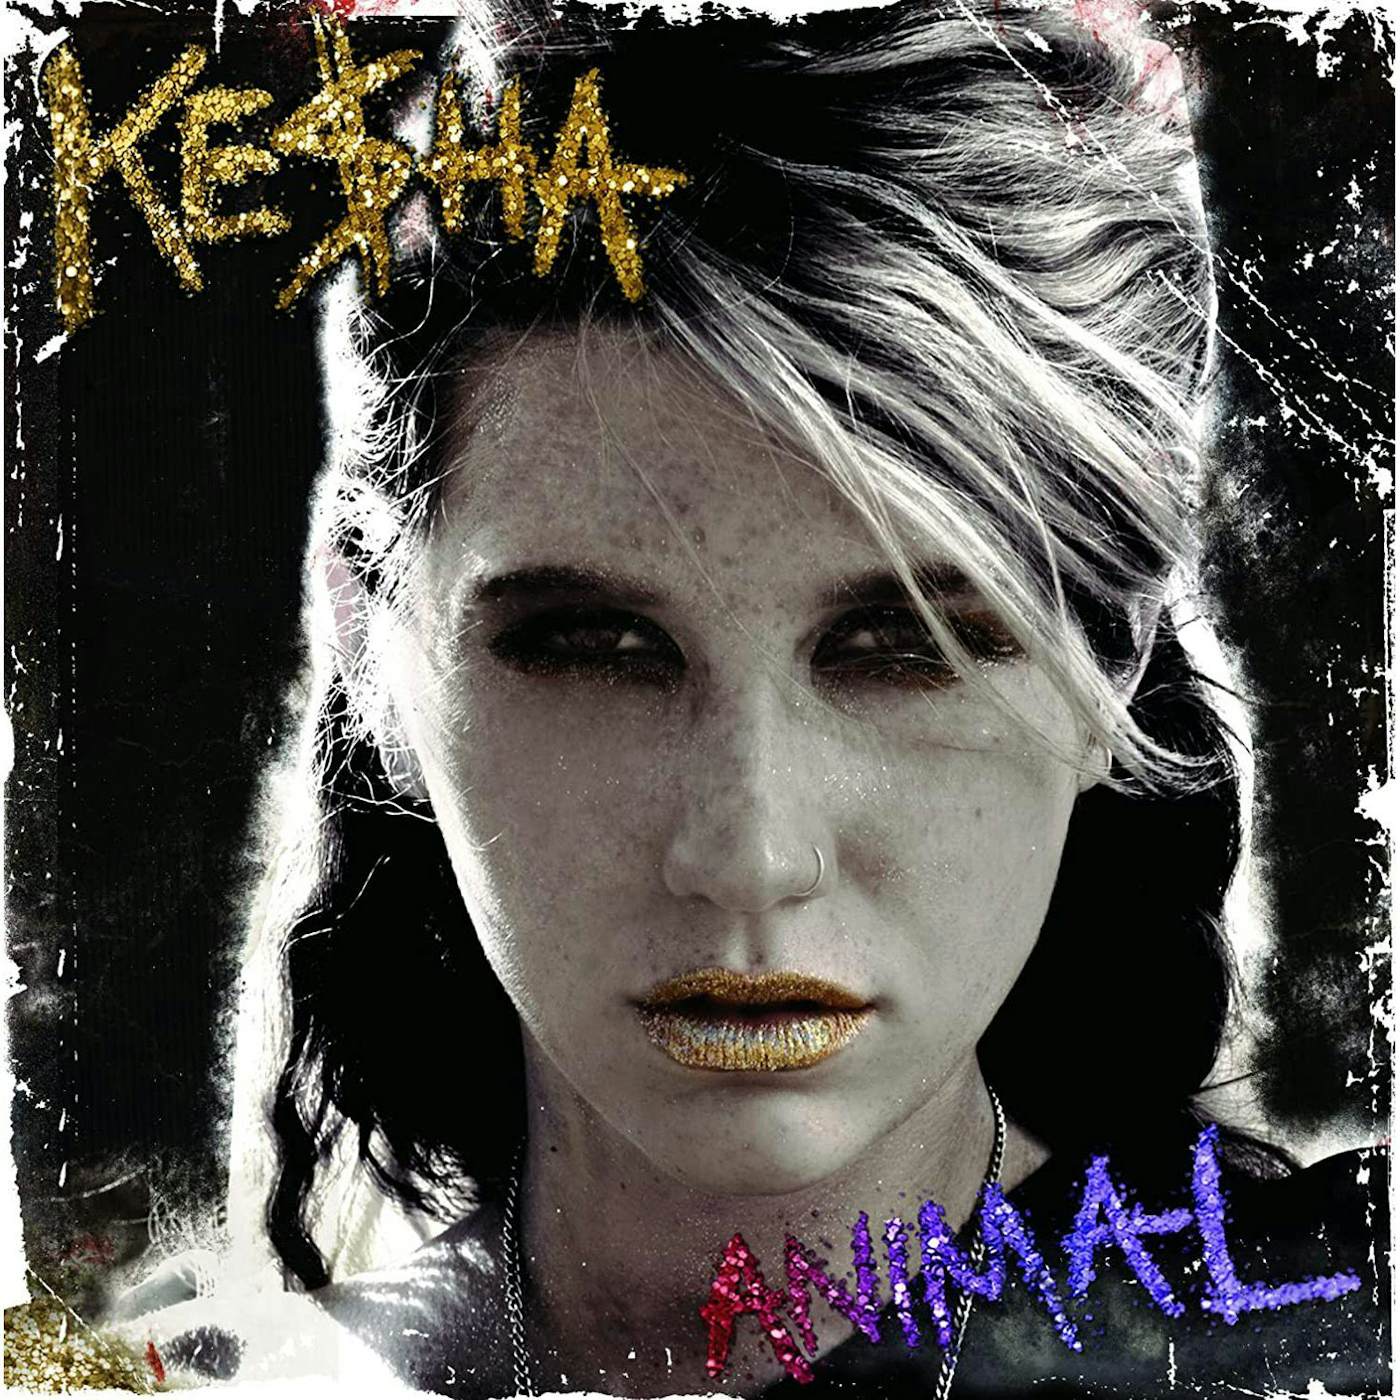 Kesha Animal (2LP) Vinyl Record